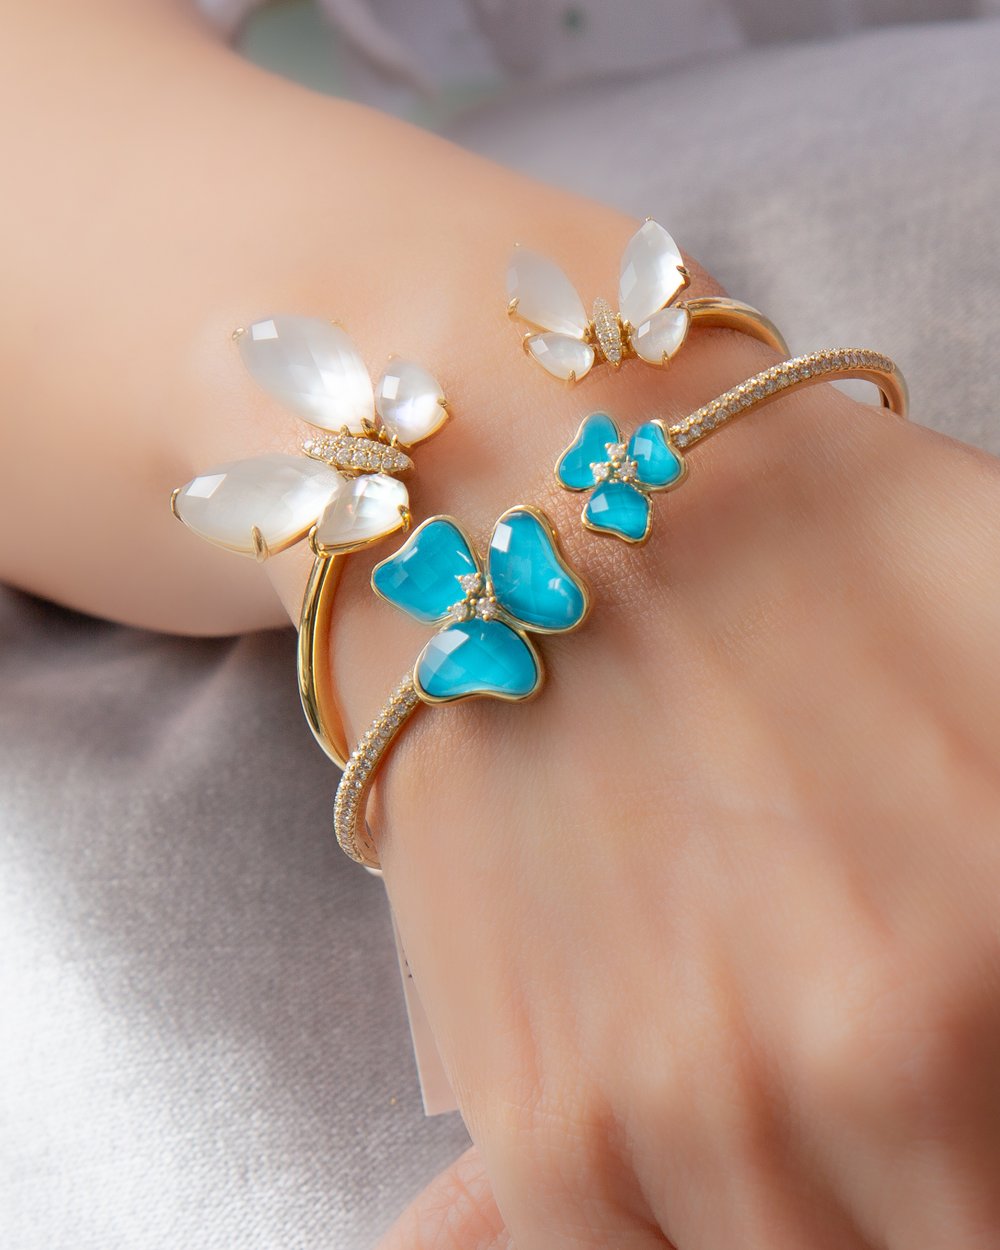 Remembrance Bracelet using Flower Petals - FENNO FASHION, LLC